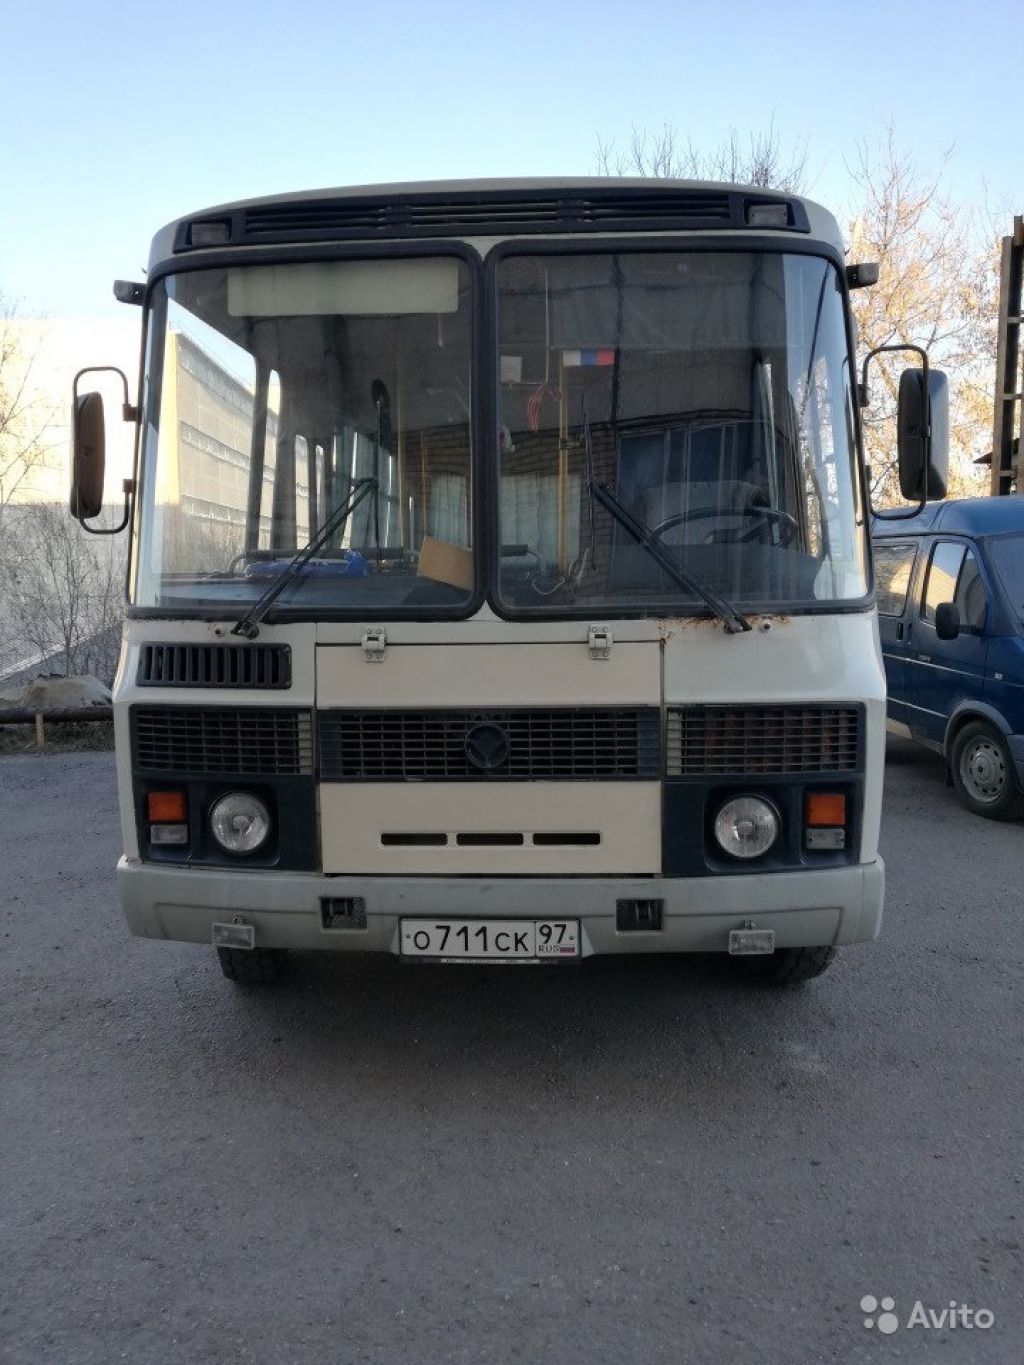 Продажа Автобуса паз в Москве. Фото 1